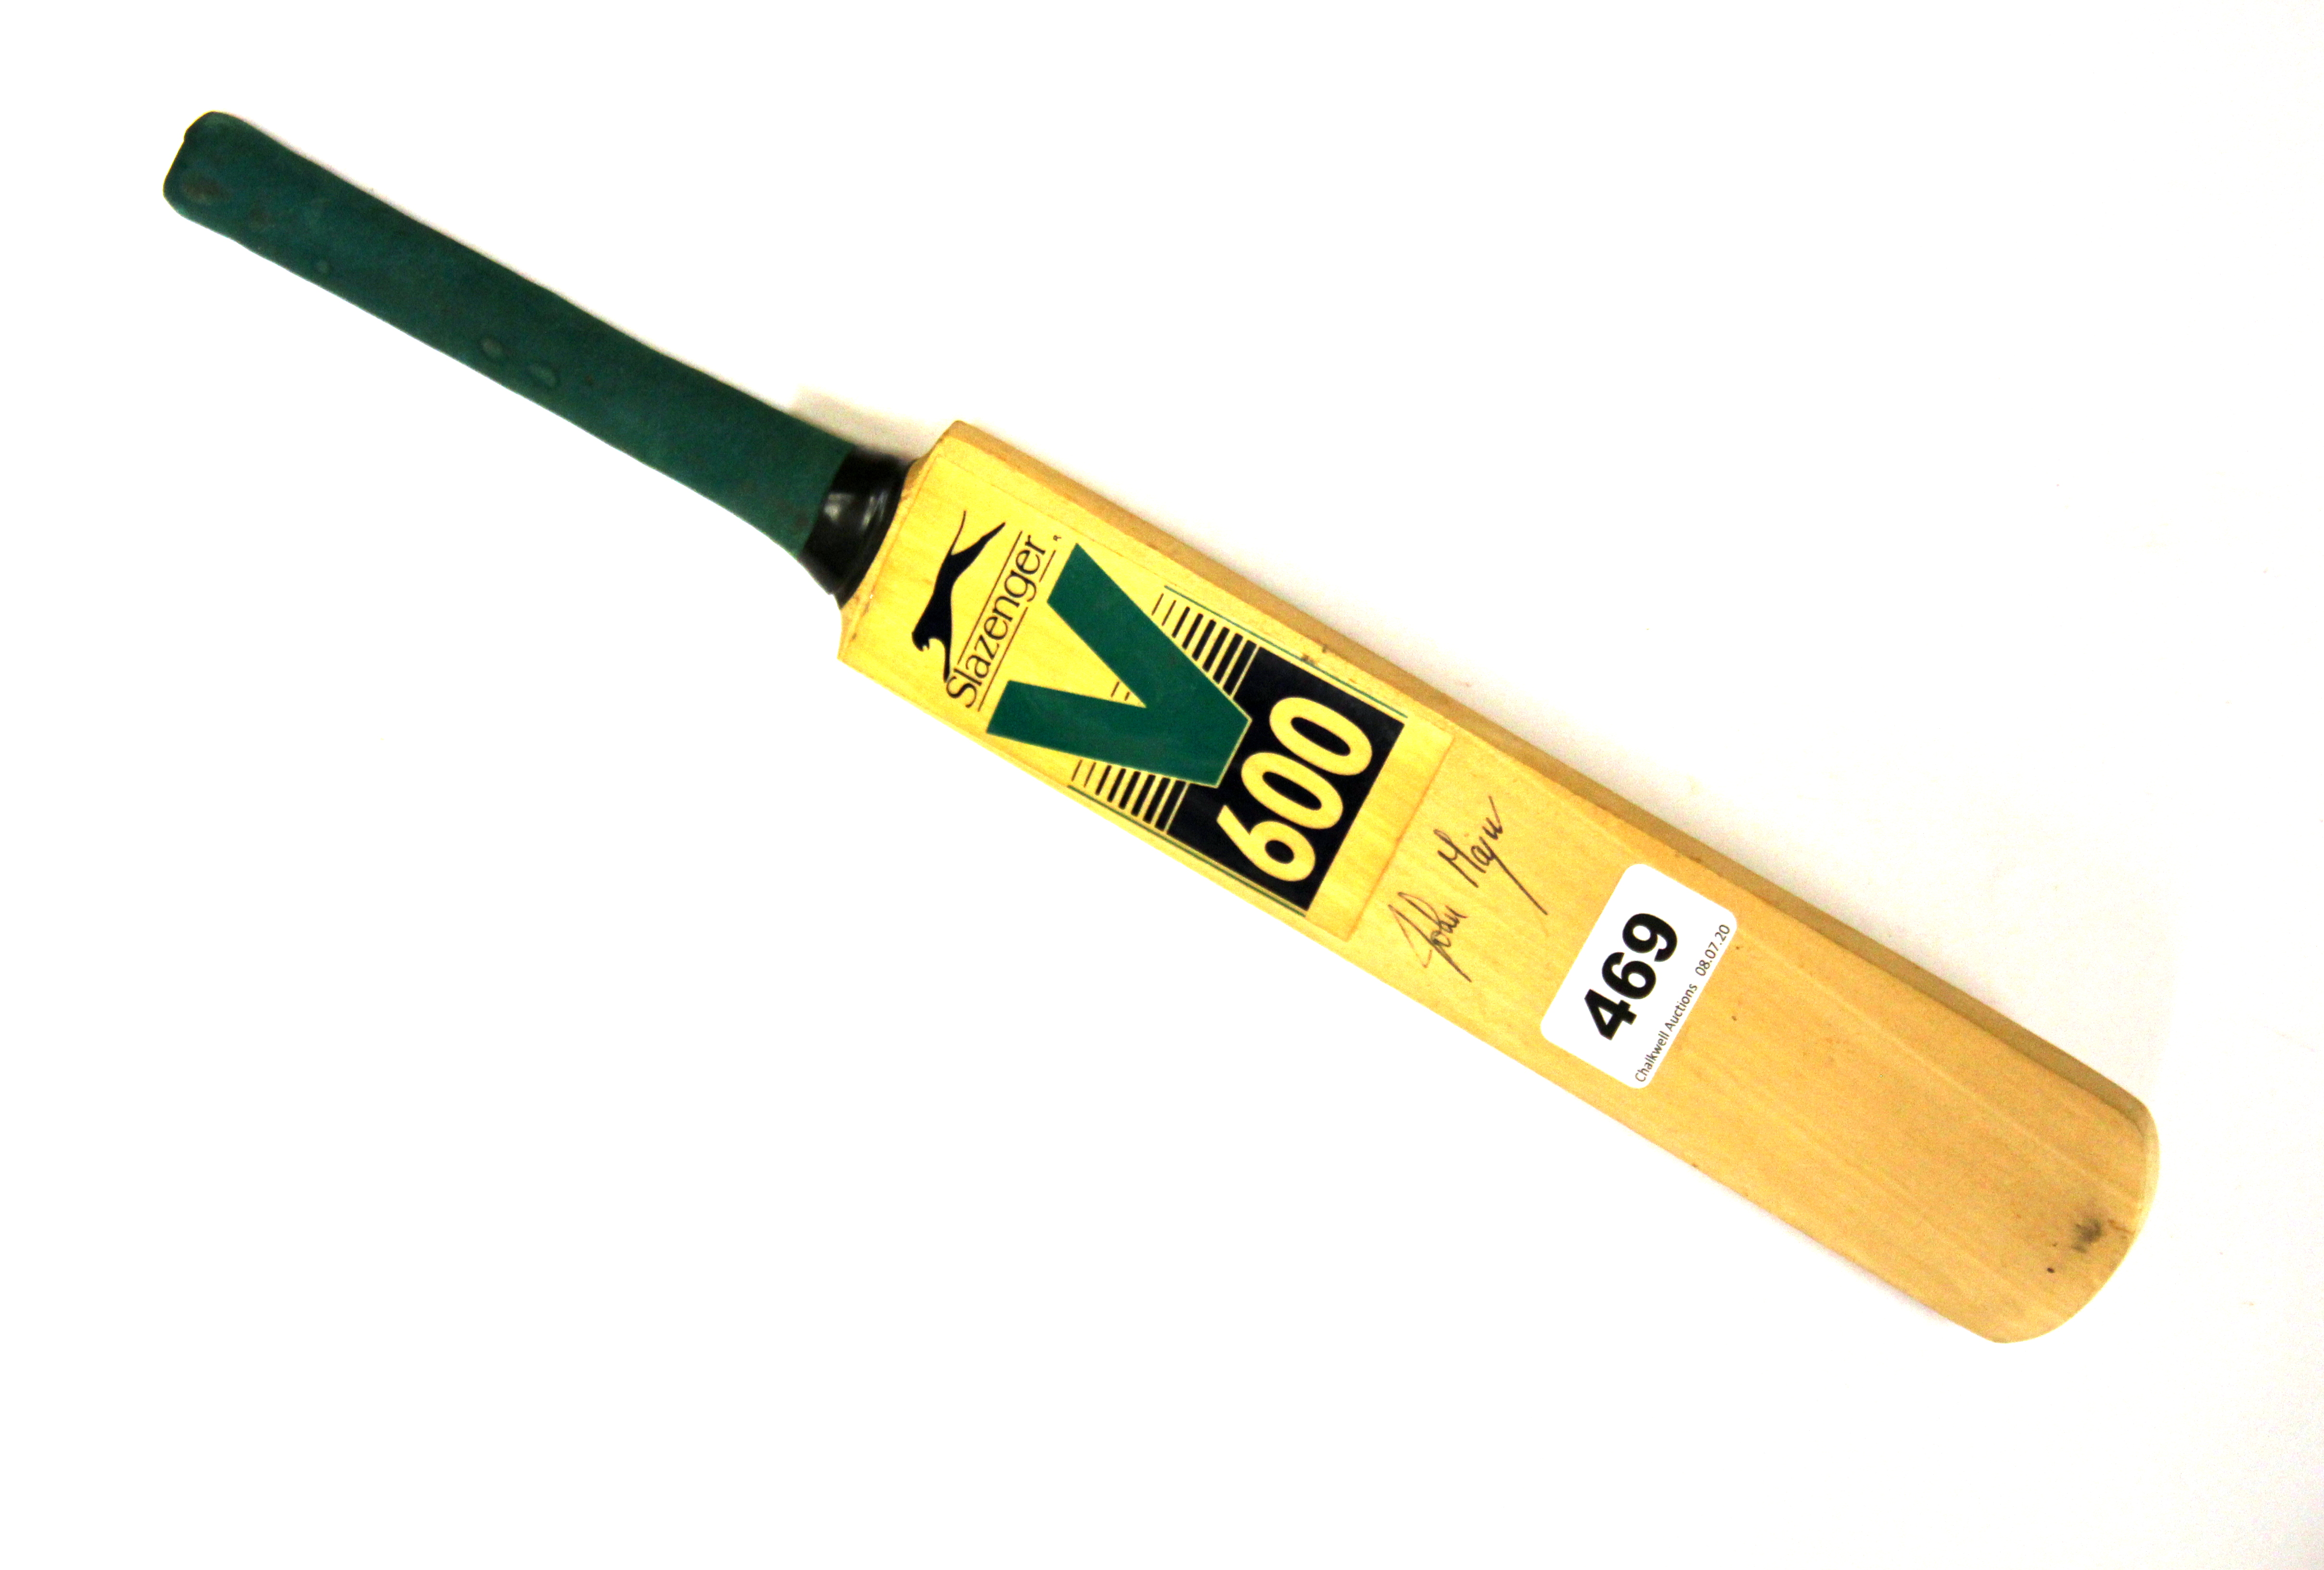 A miniature cricket bat signed by former Prime Minister John Major.